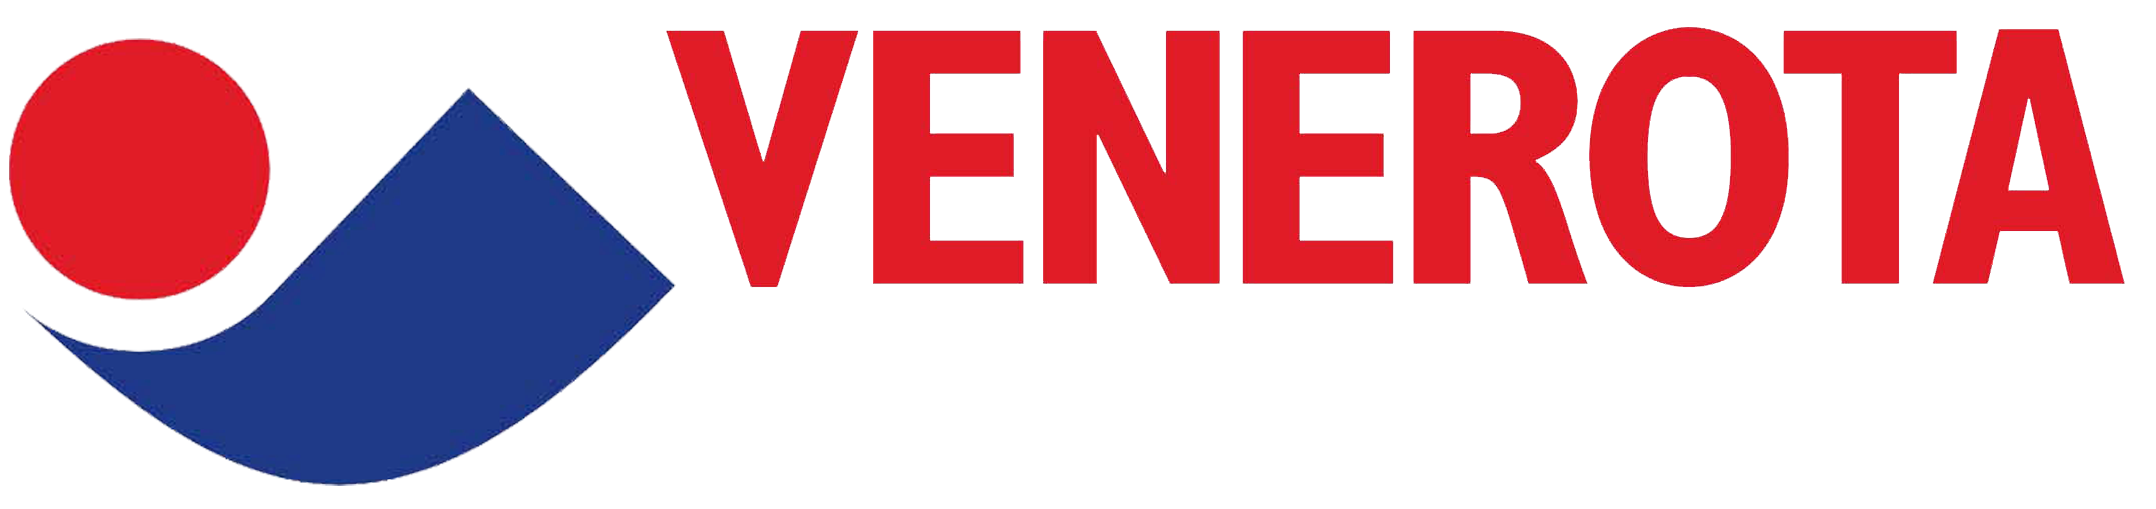 logo Venerota